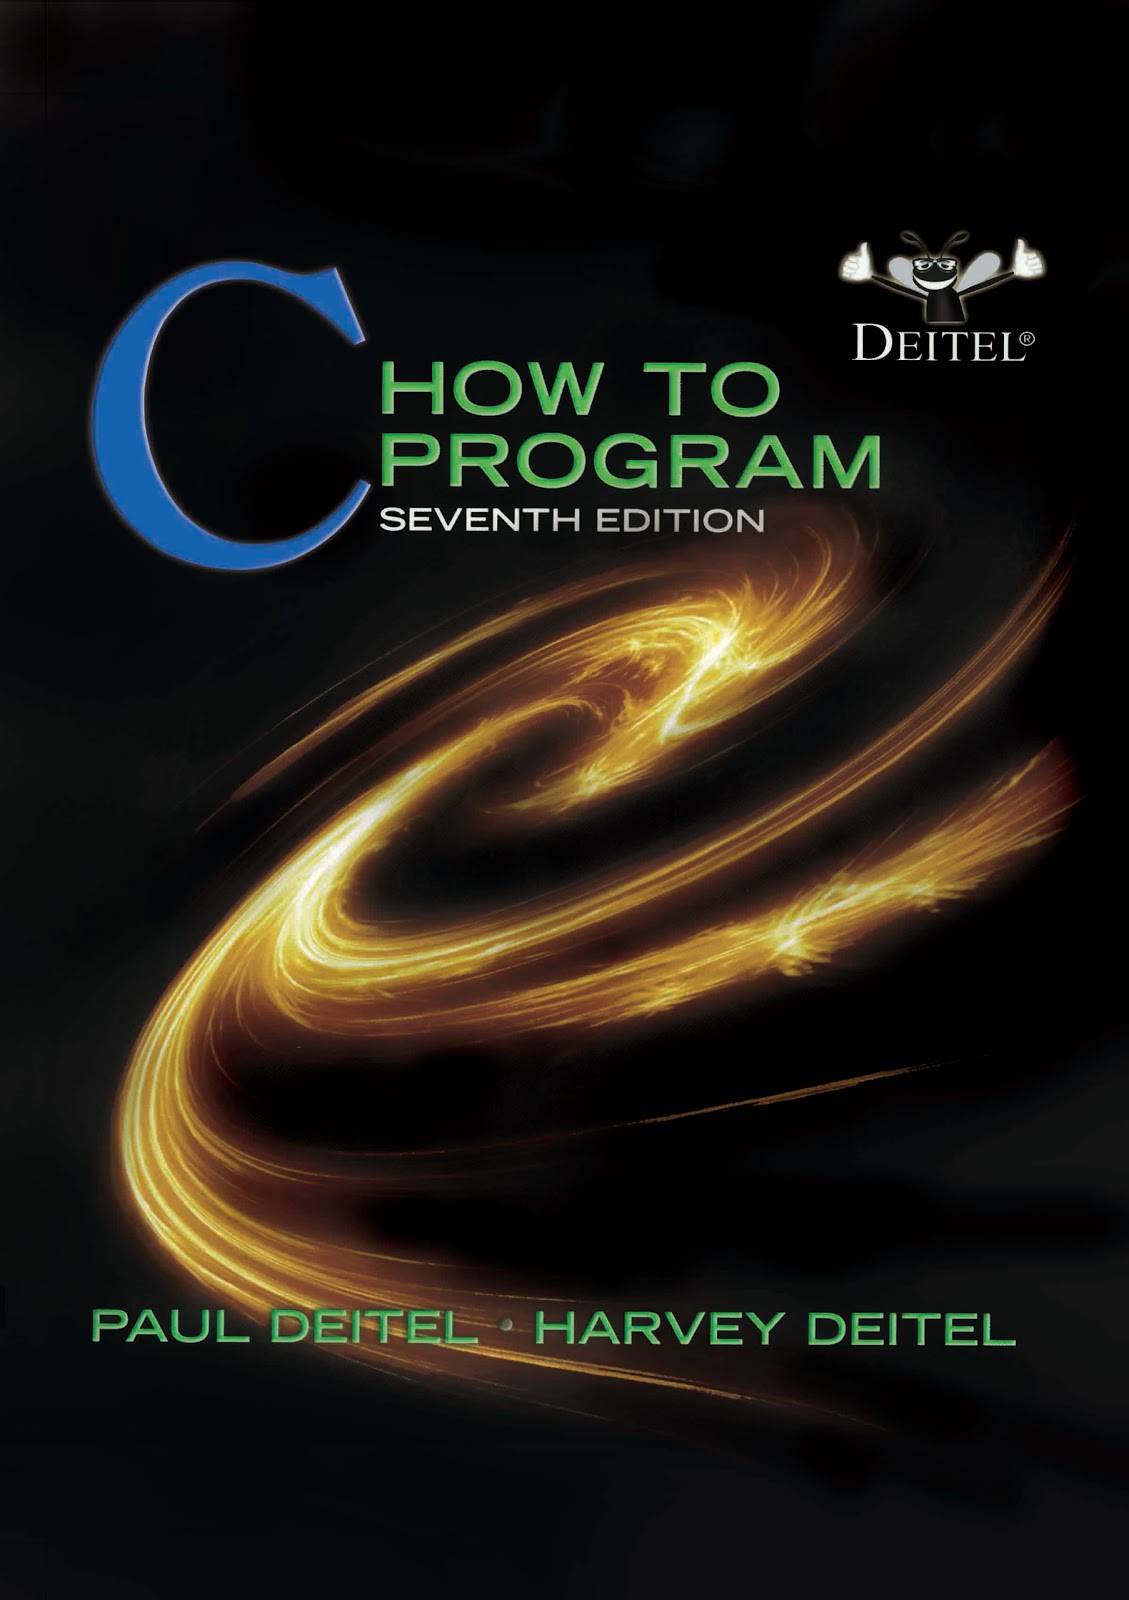 C How to Program, 7th Edition by Paul Deitel, Harvey Deitel μAcademic